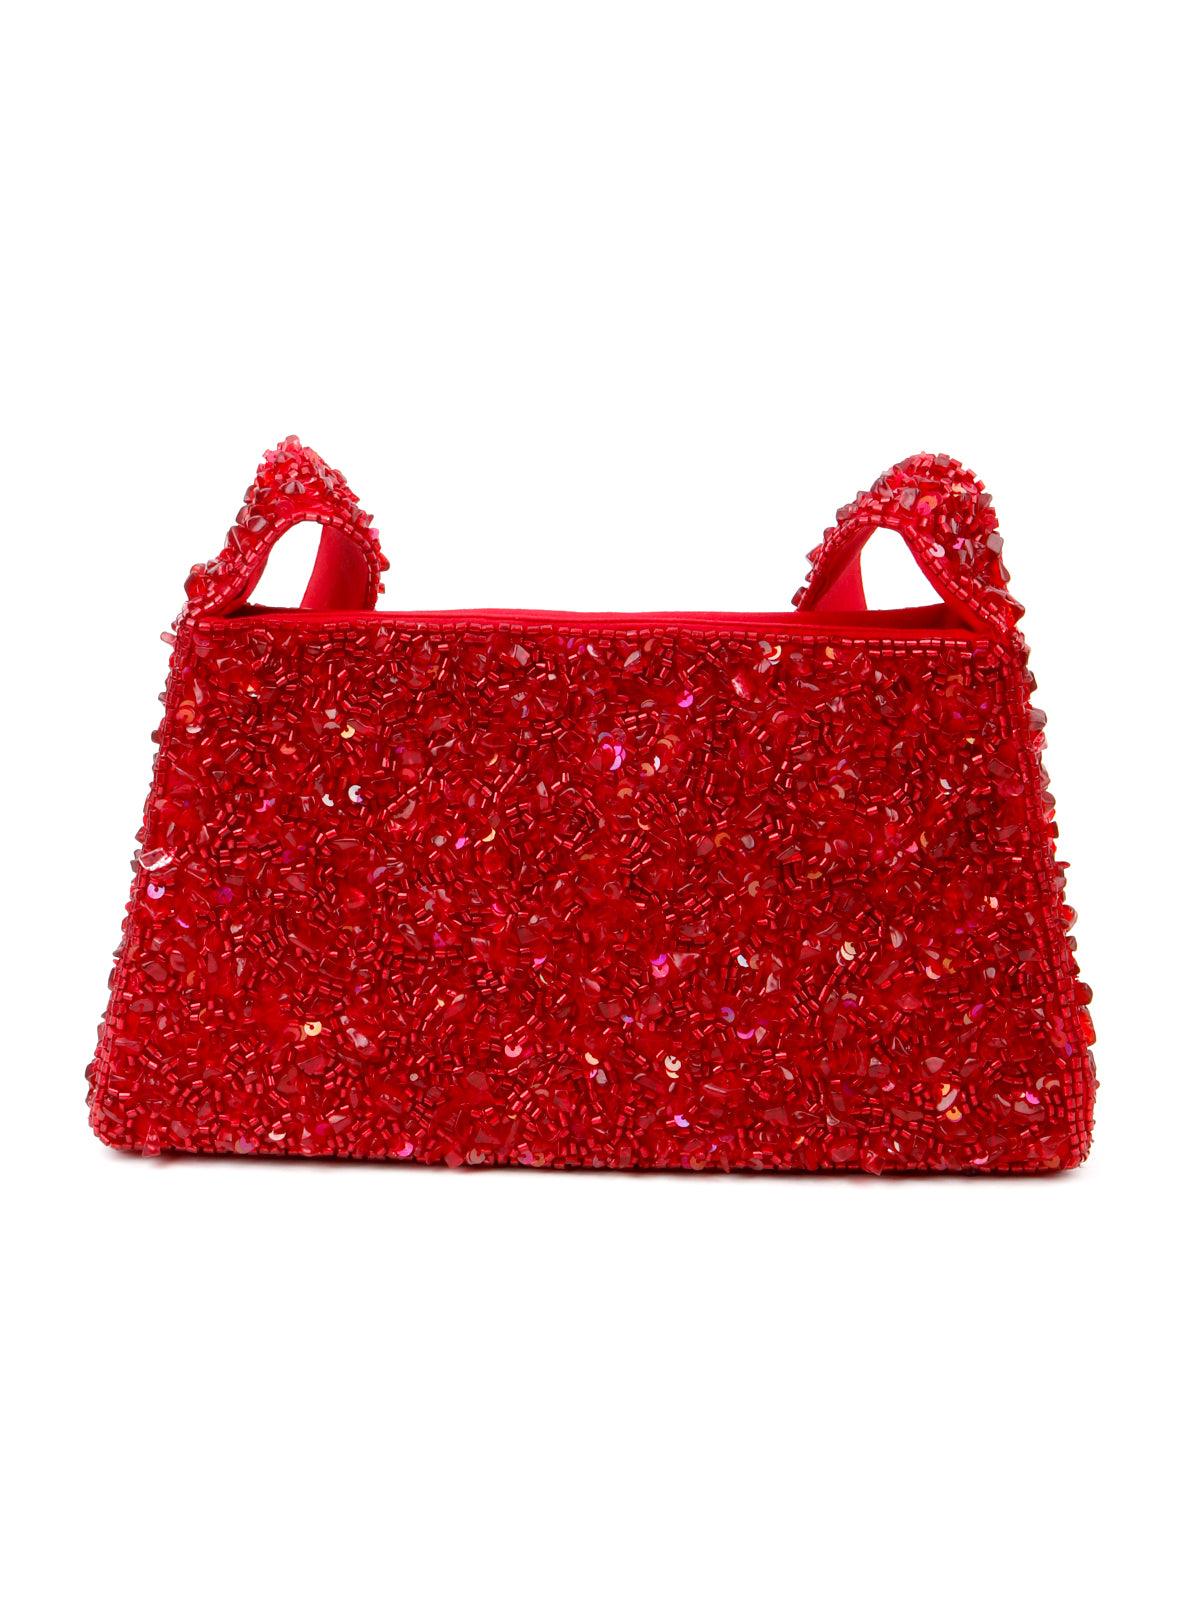 stone work clutch purse-designer hand bags-beaded| Alibaba.com